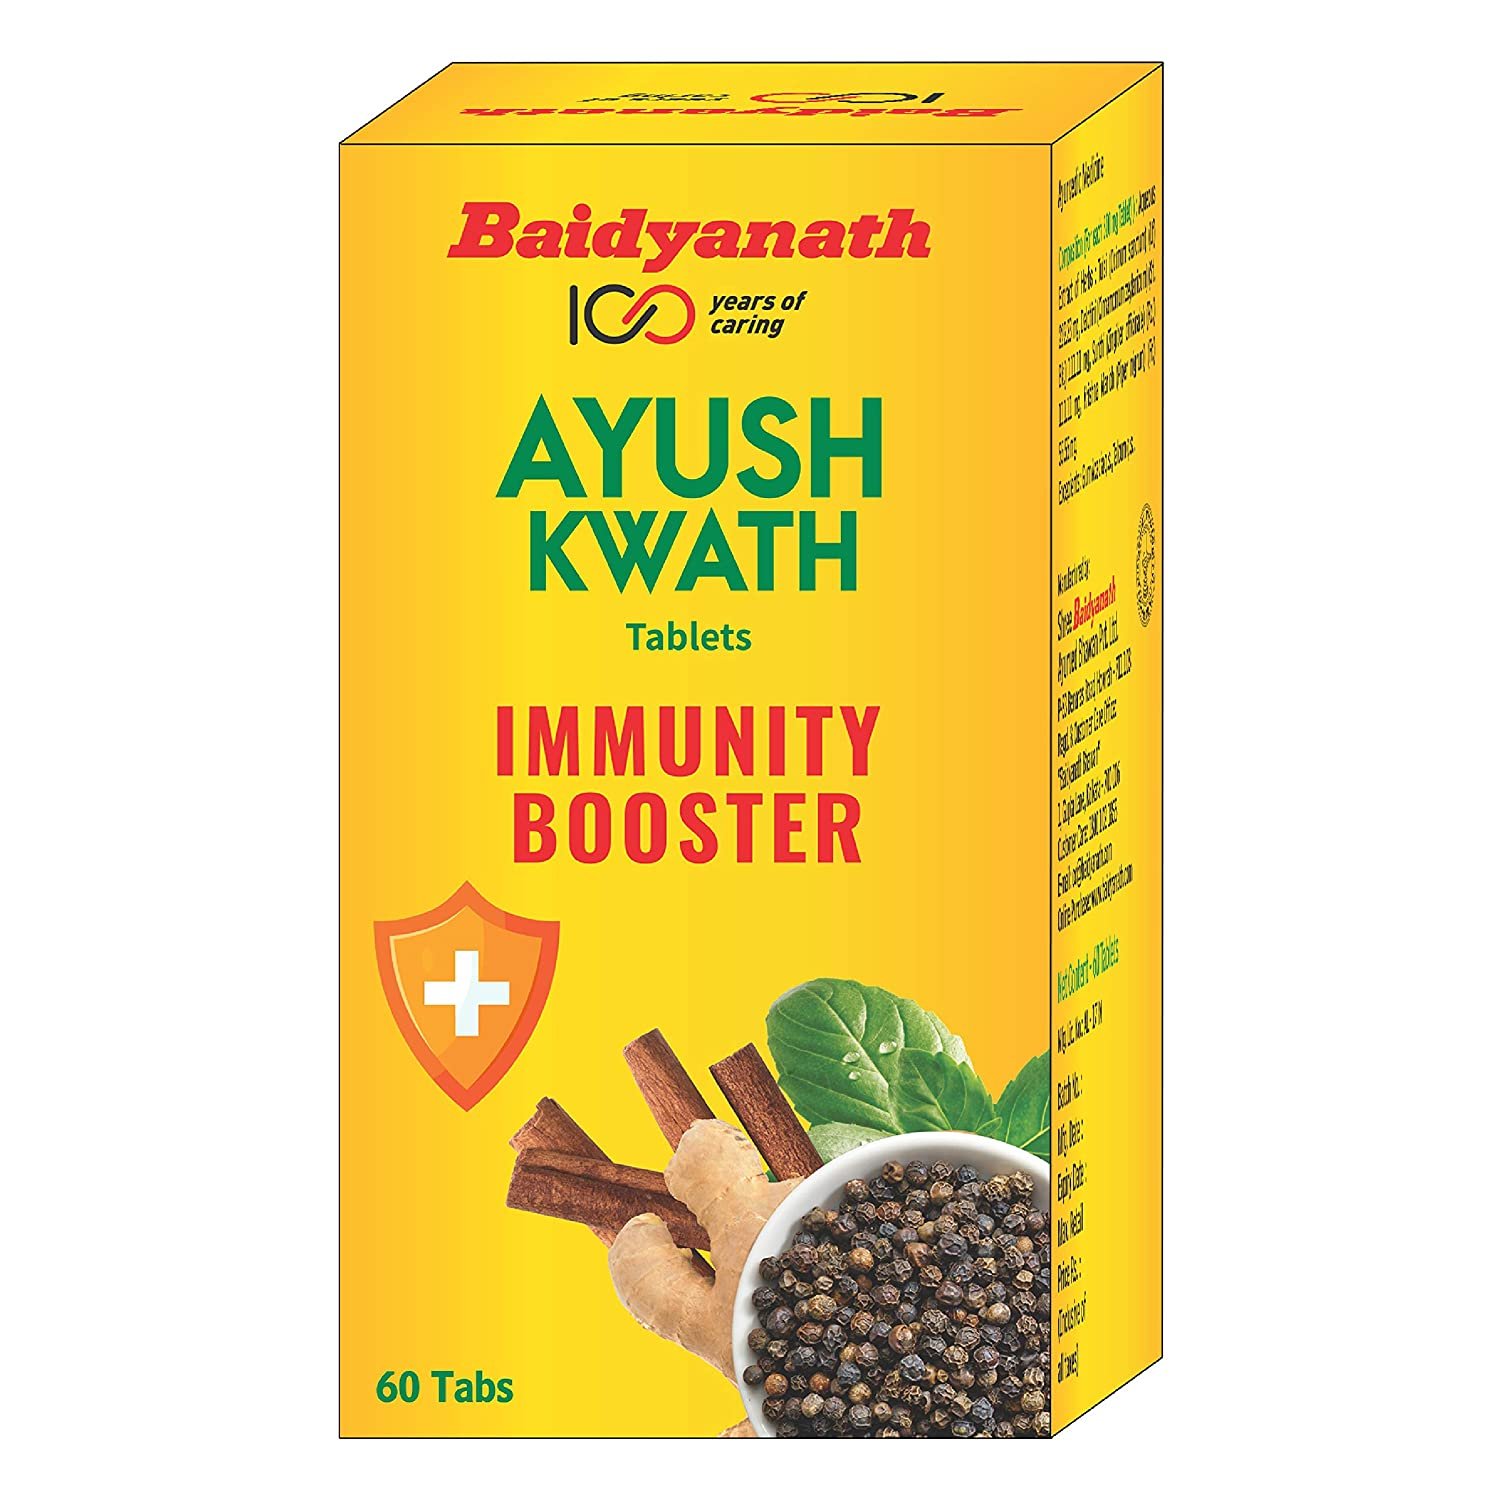 Baidyanath Ayush Kwath Tablets - Immunity Booster